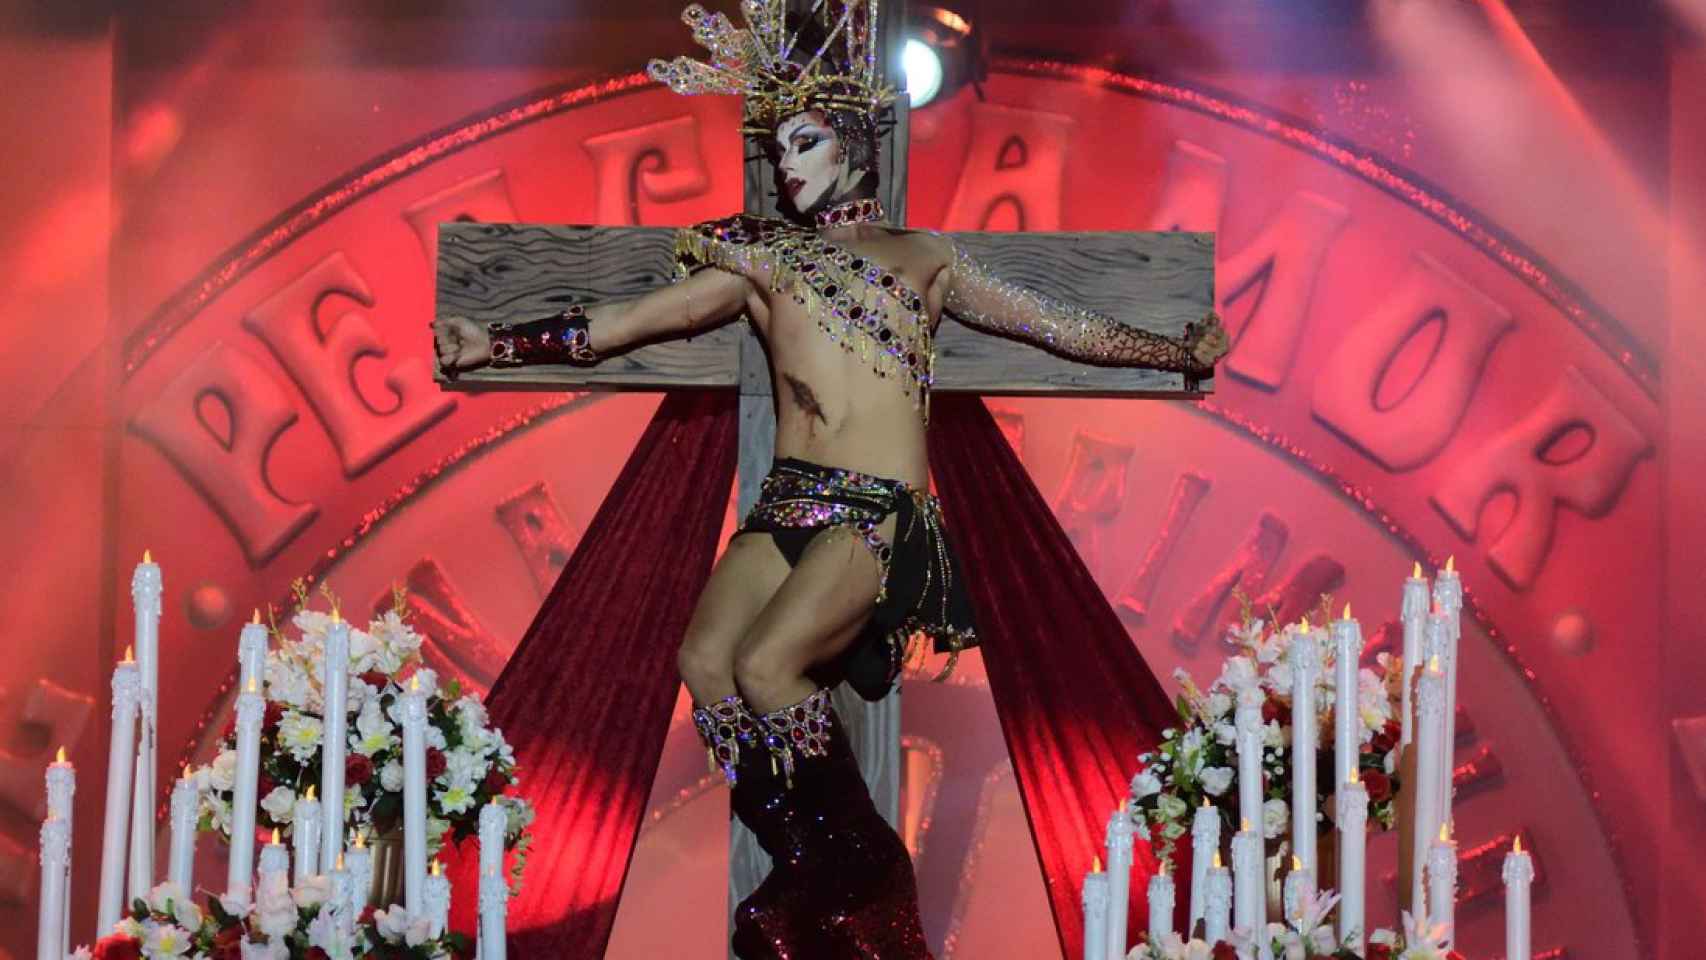 RTVE retira de su web la gala del carnaval que coronó a una Virgen drag